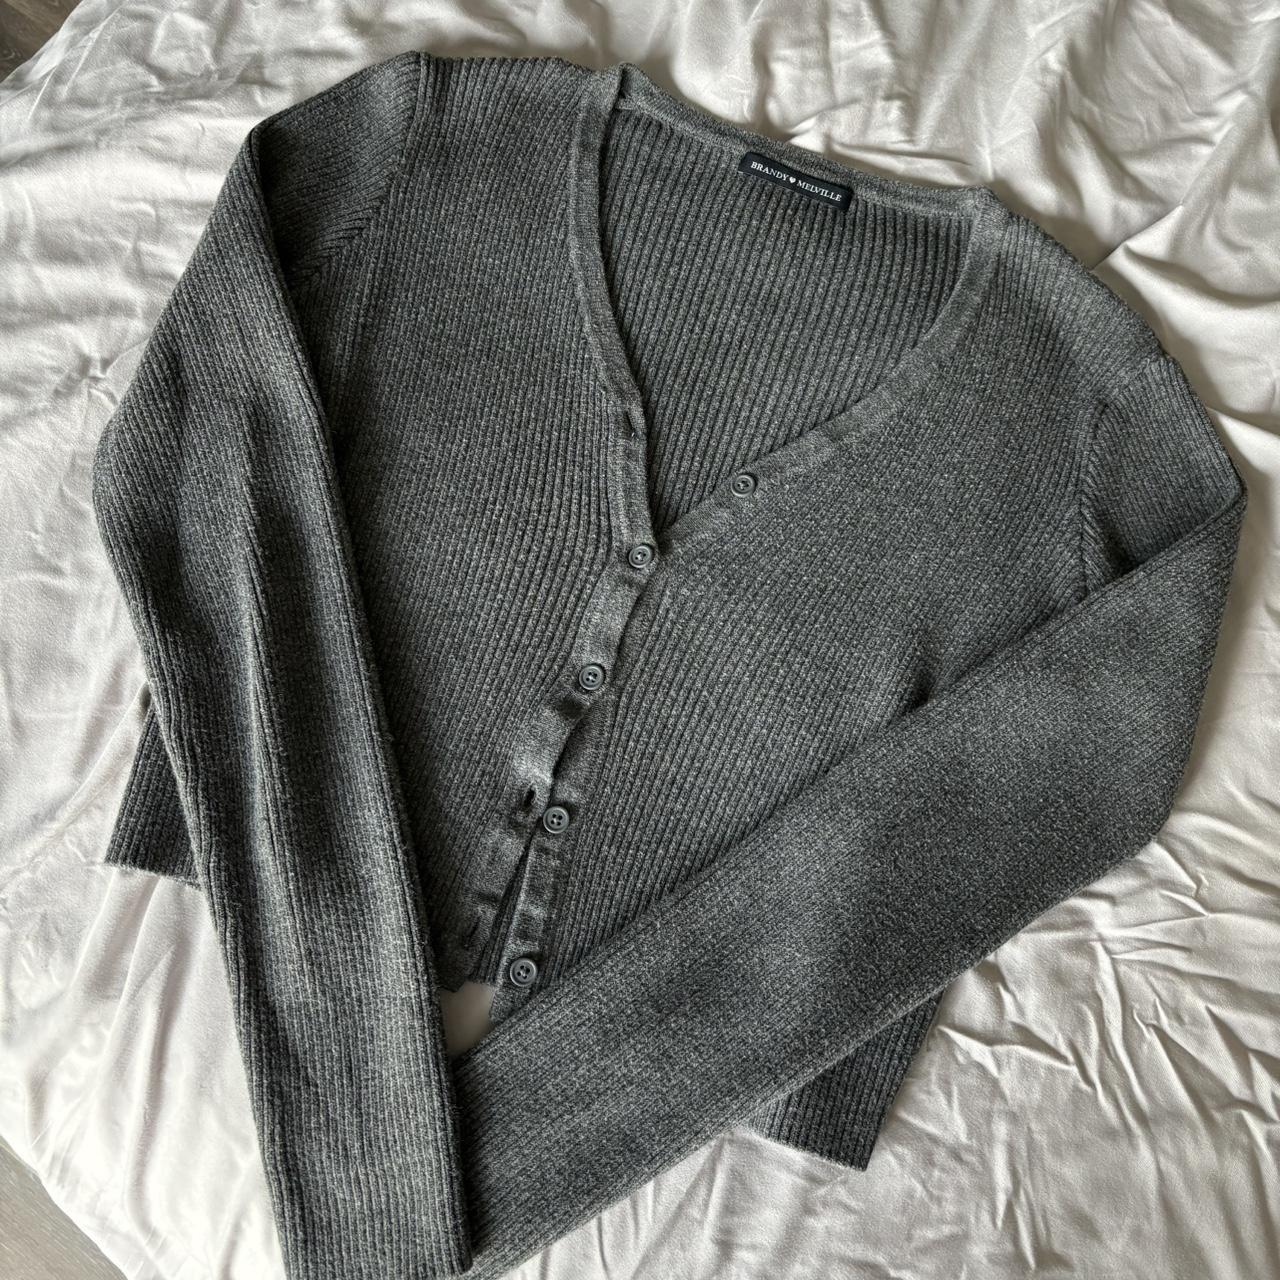 Brandy Melville grey knit button up cropped sweater... - Depop